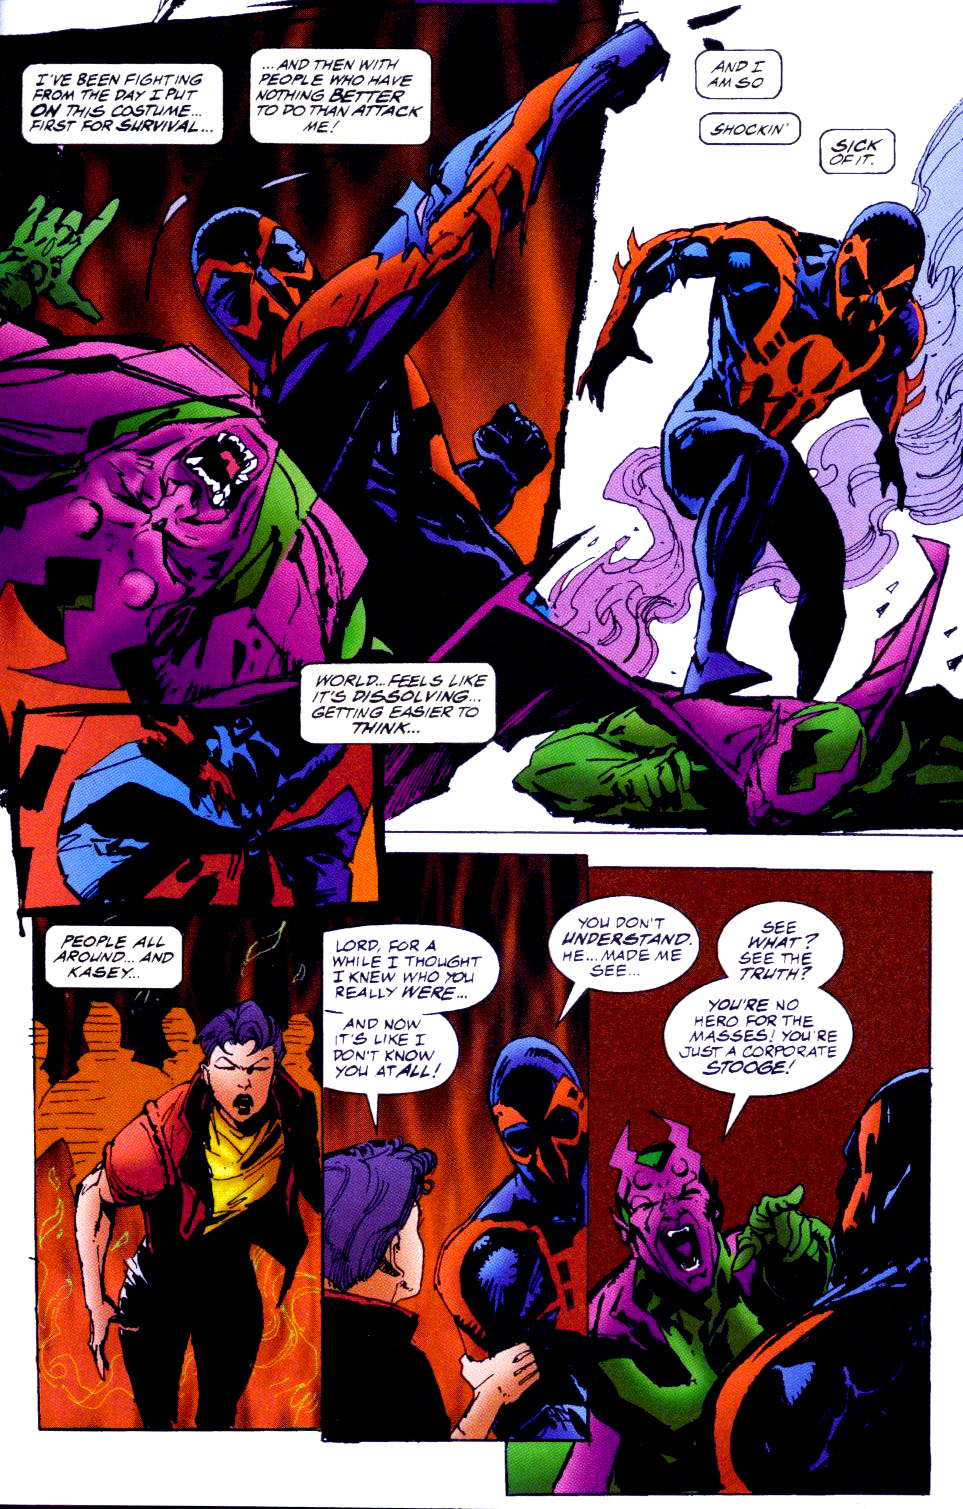 Spider-Man 2099 (1992) issue 40 - Page 18